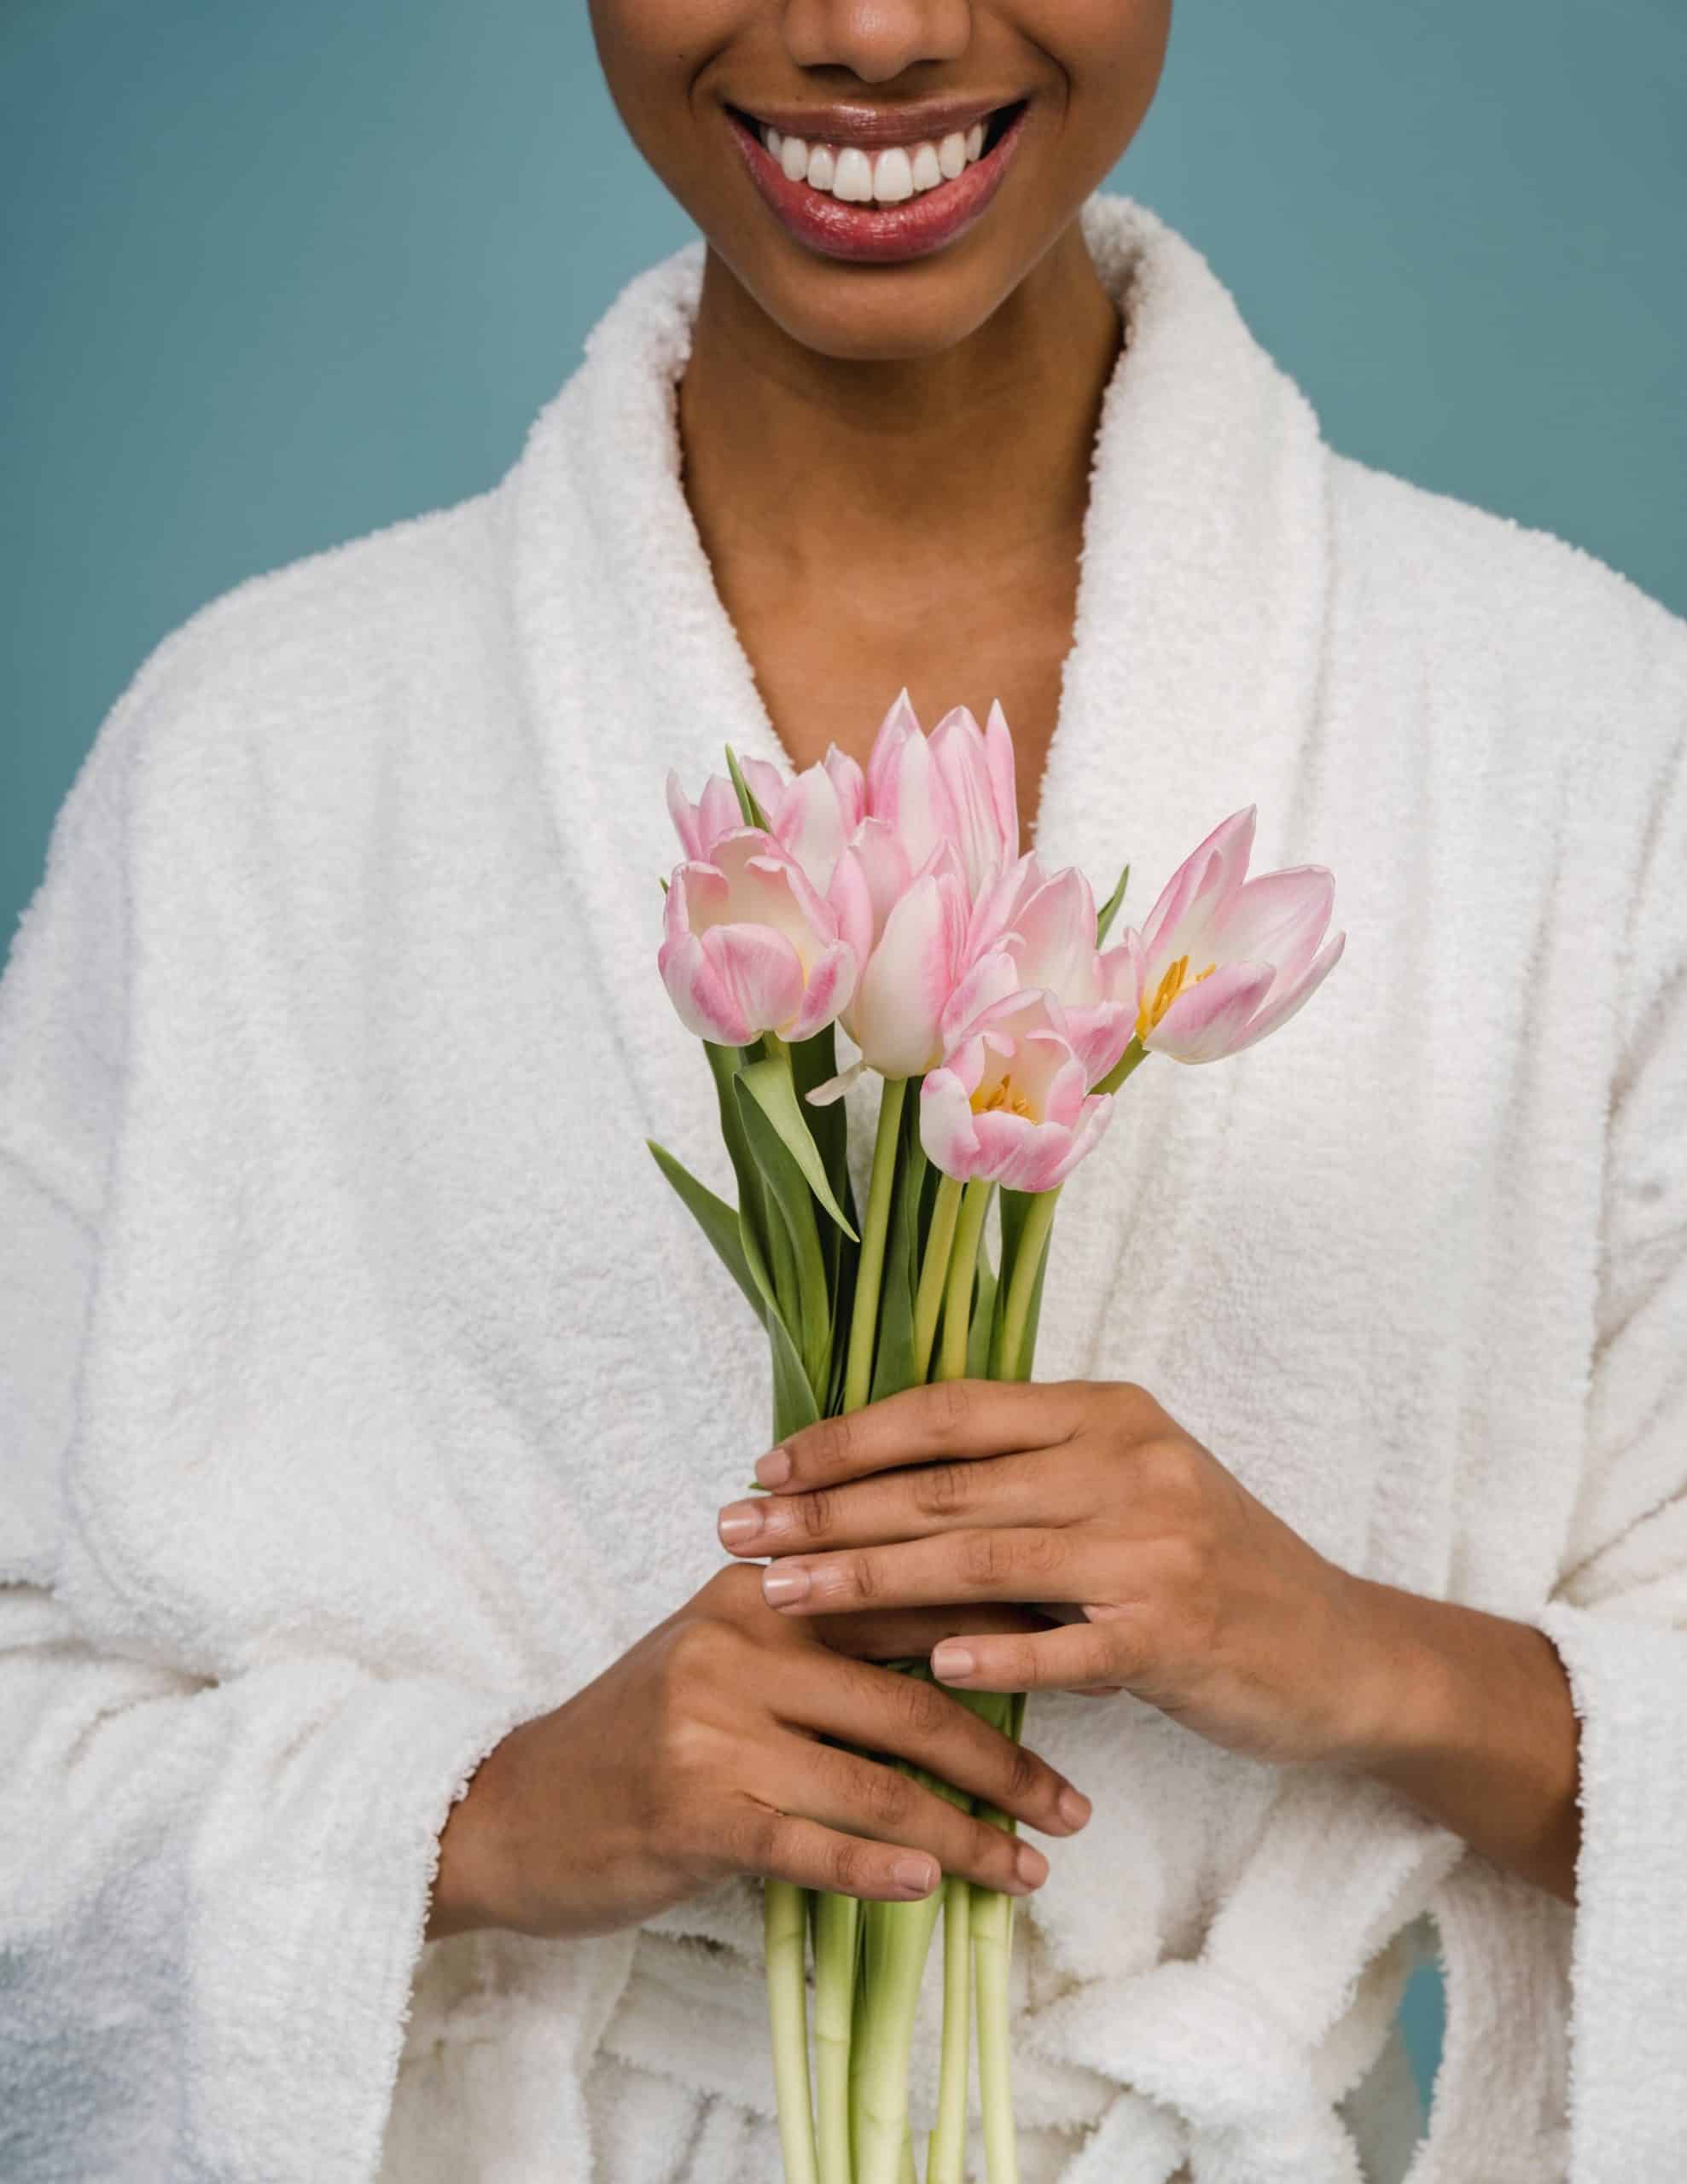 How to choose a warm, feminine bathrobe?